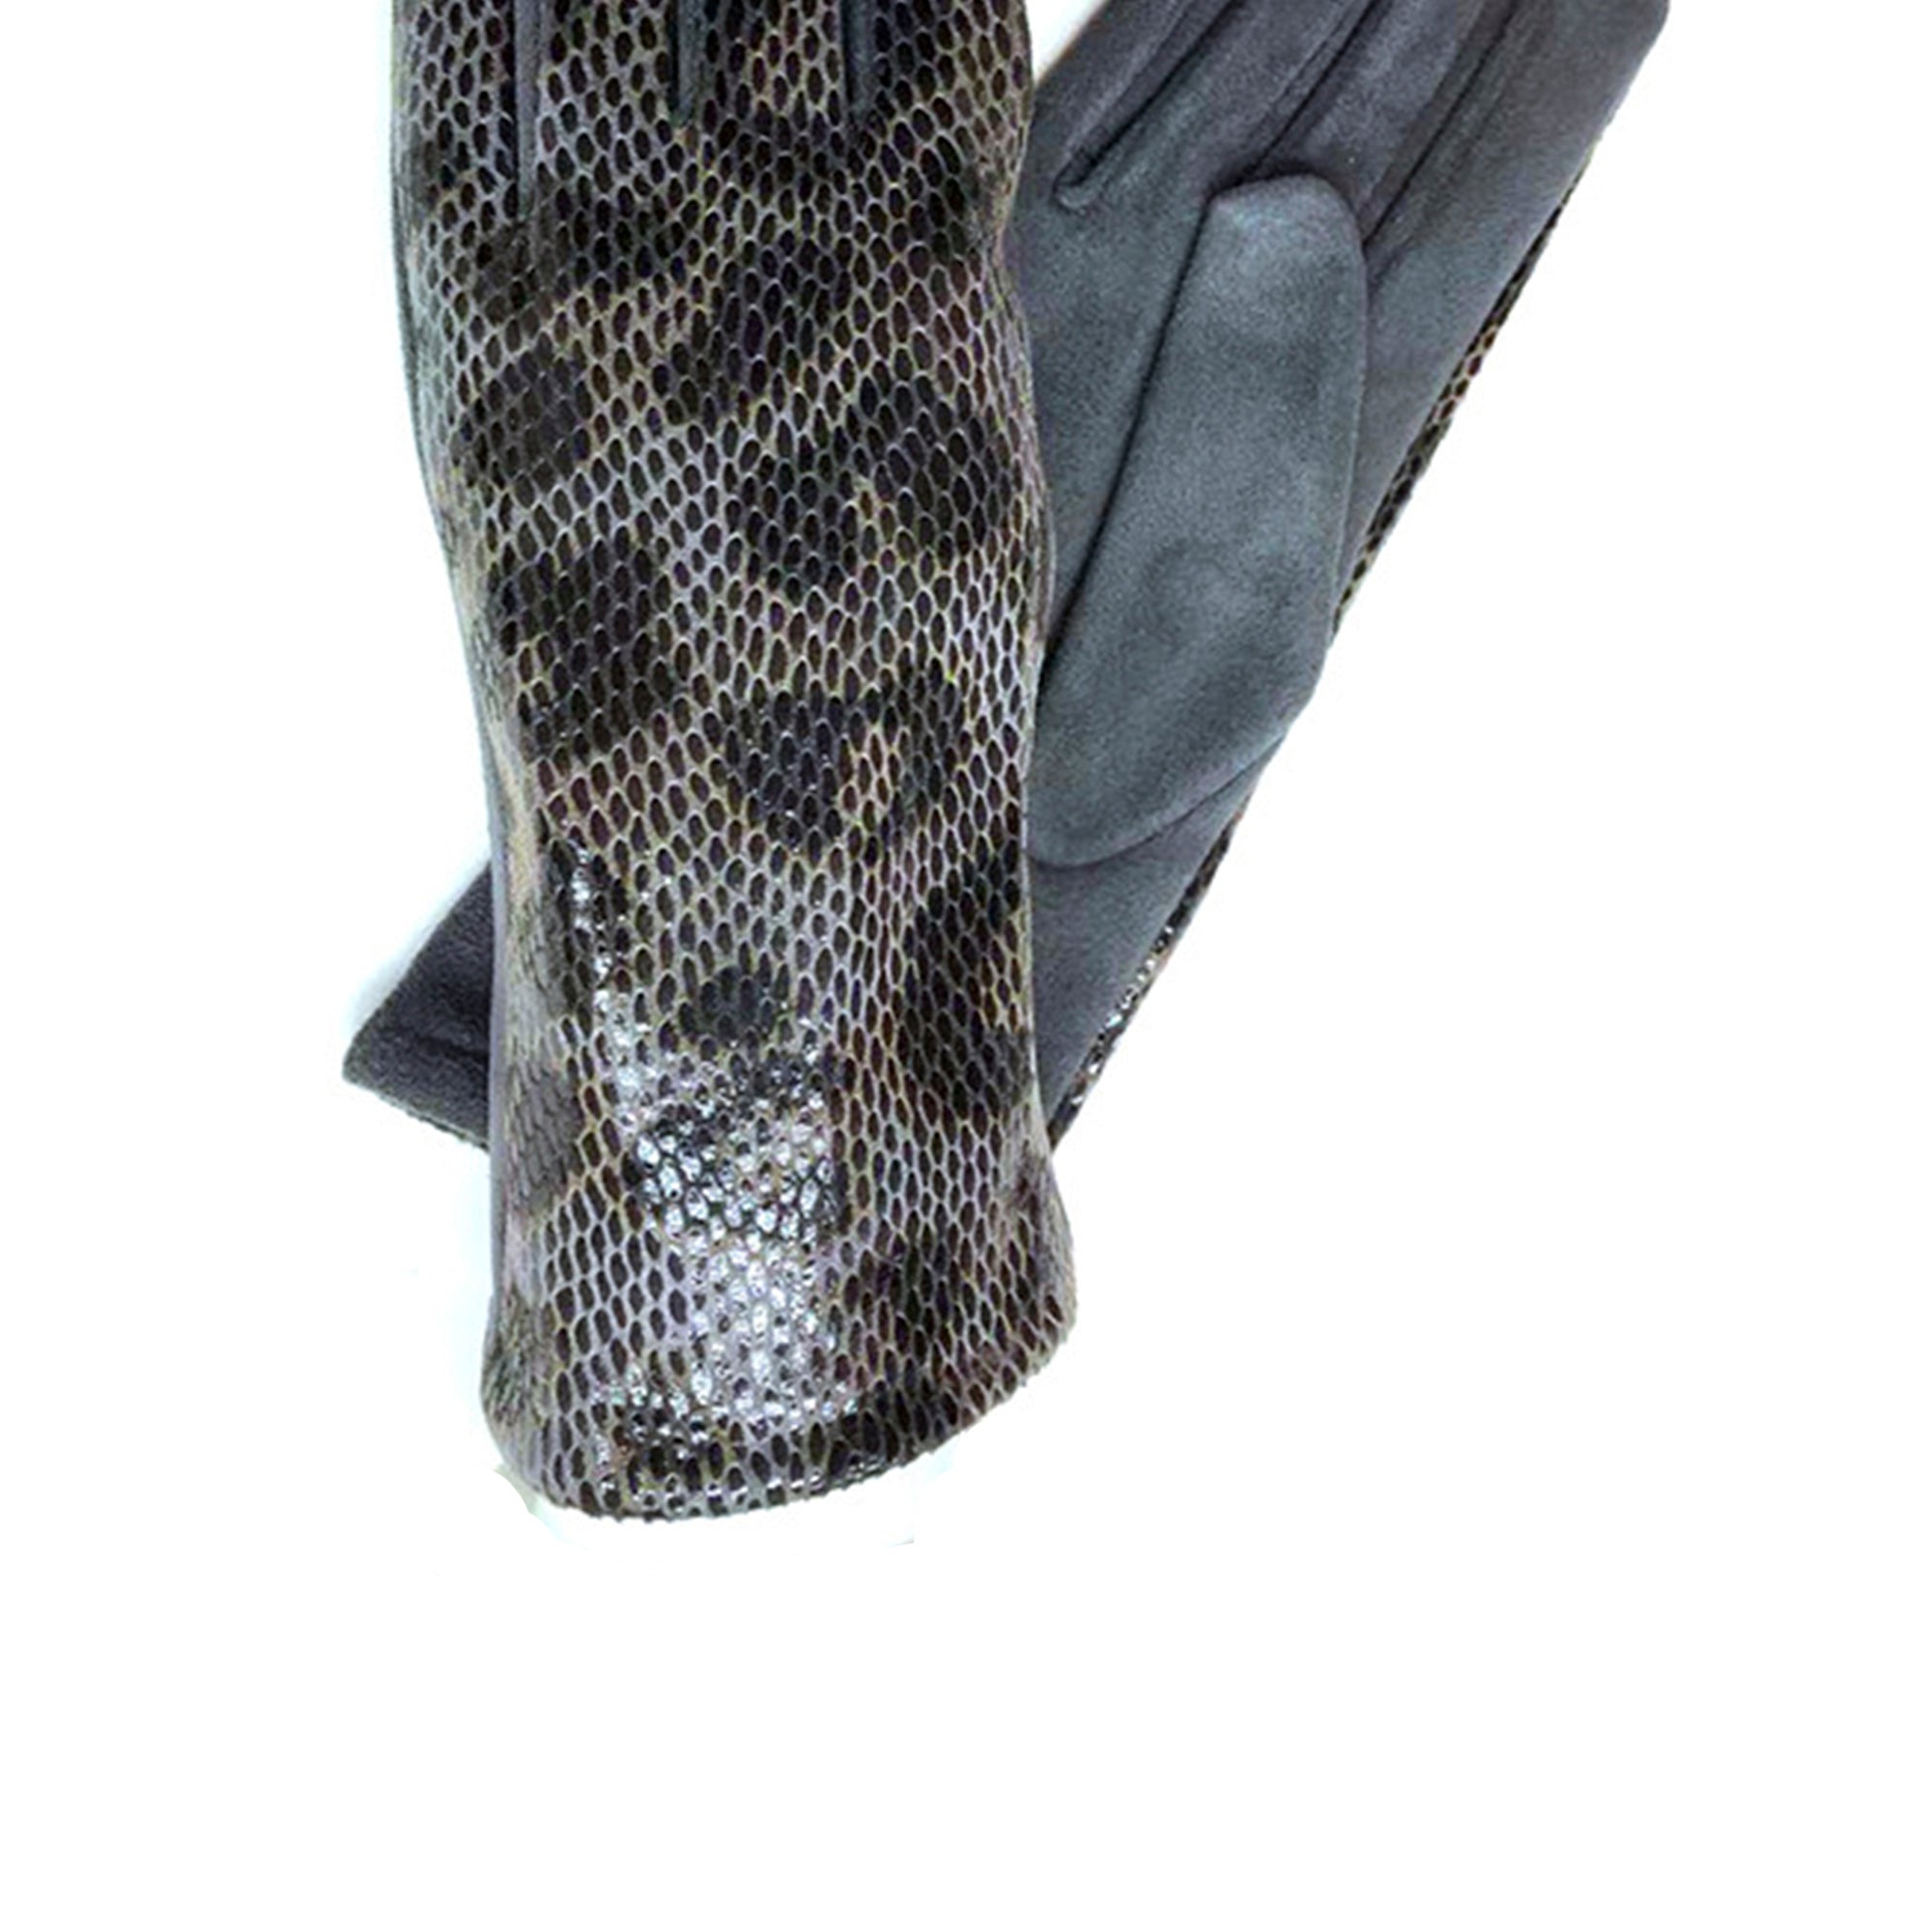 Leopard Printed Suede Gloves GL0004